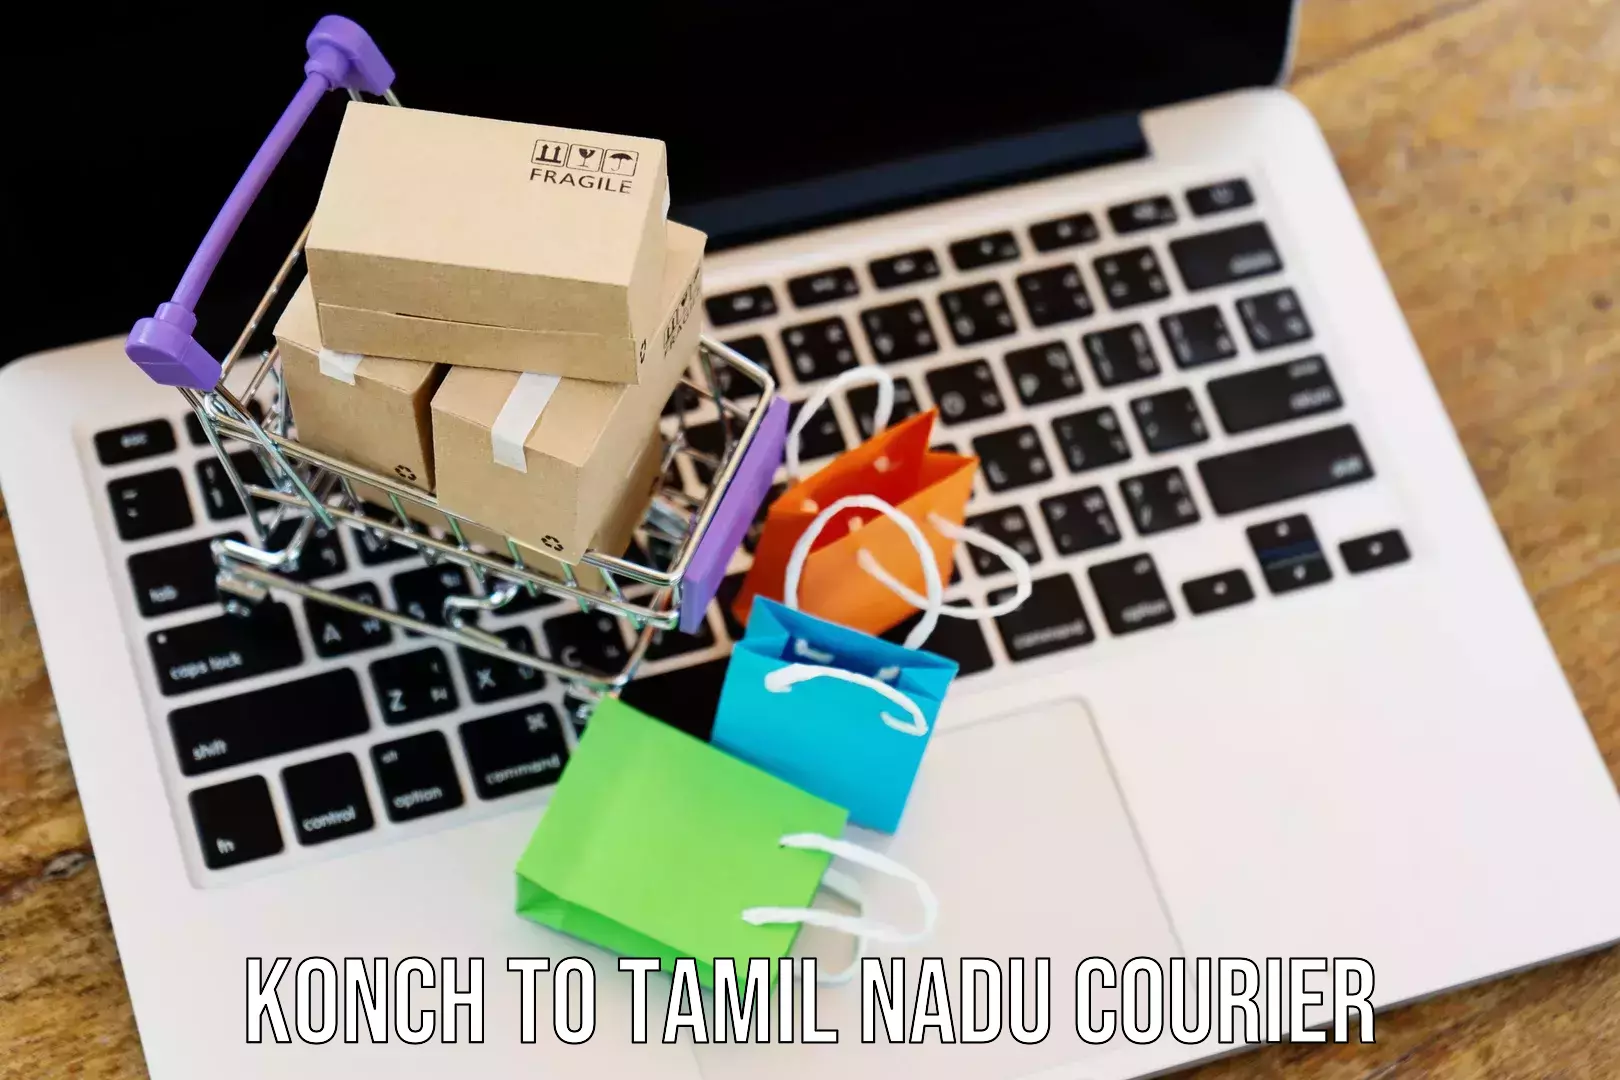 Multi-modal transport Konch to Tamil Nadu